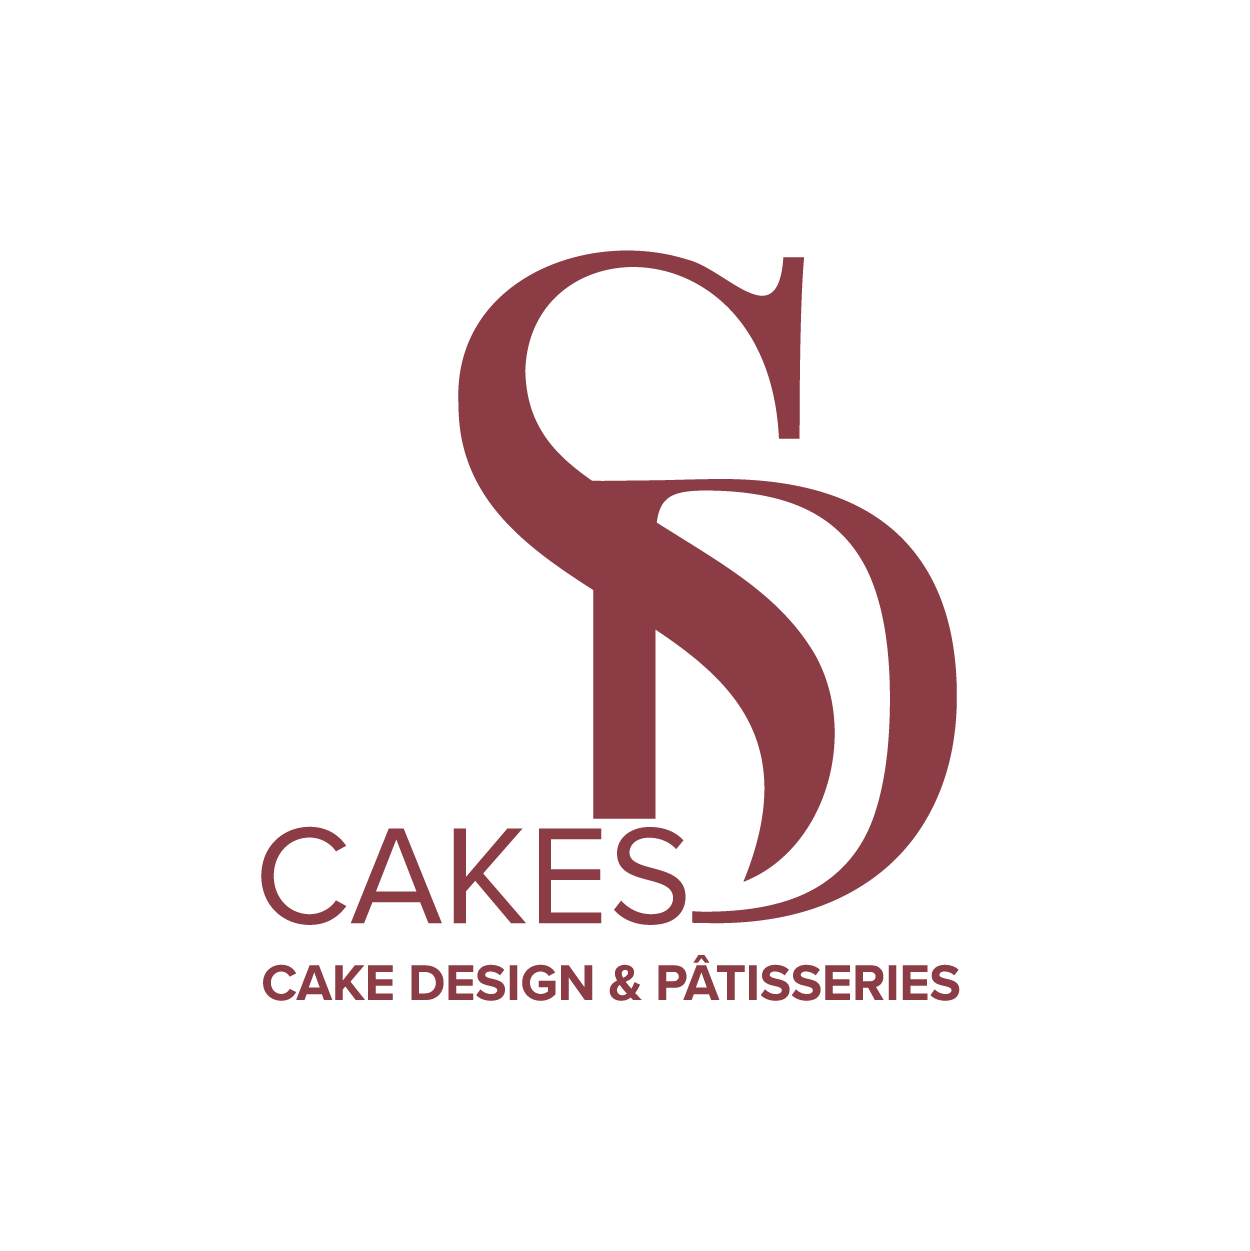 SD CAKES